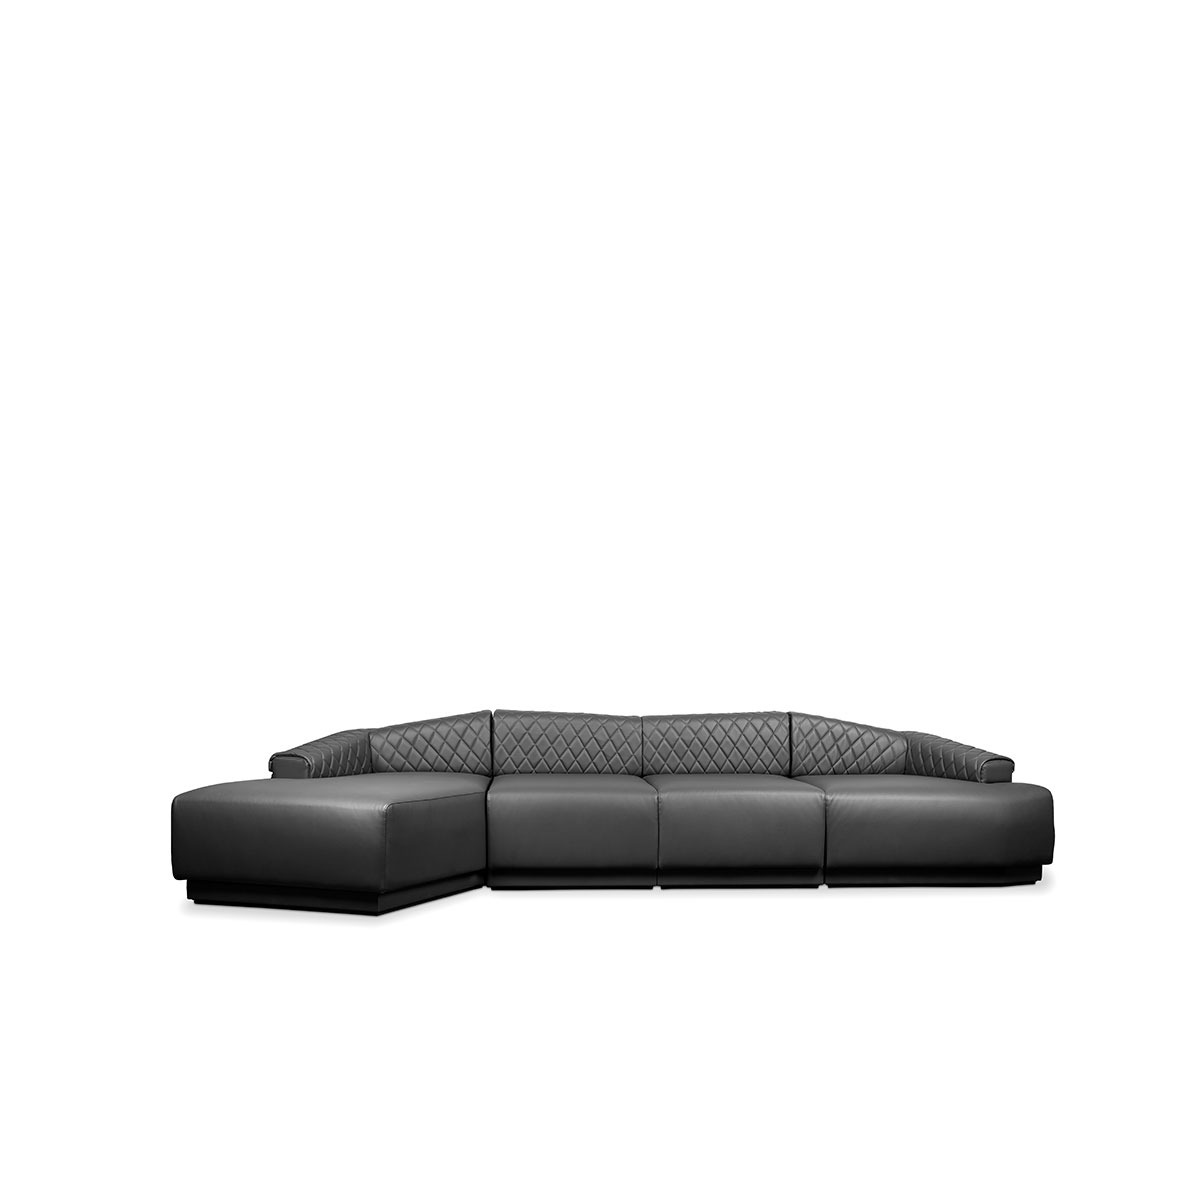 Luxxu anguis sofa general img 1200x1200 Soleil Dining Chair